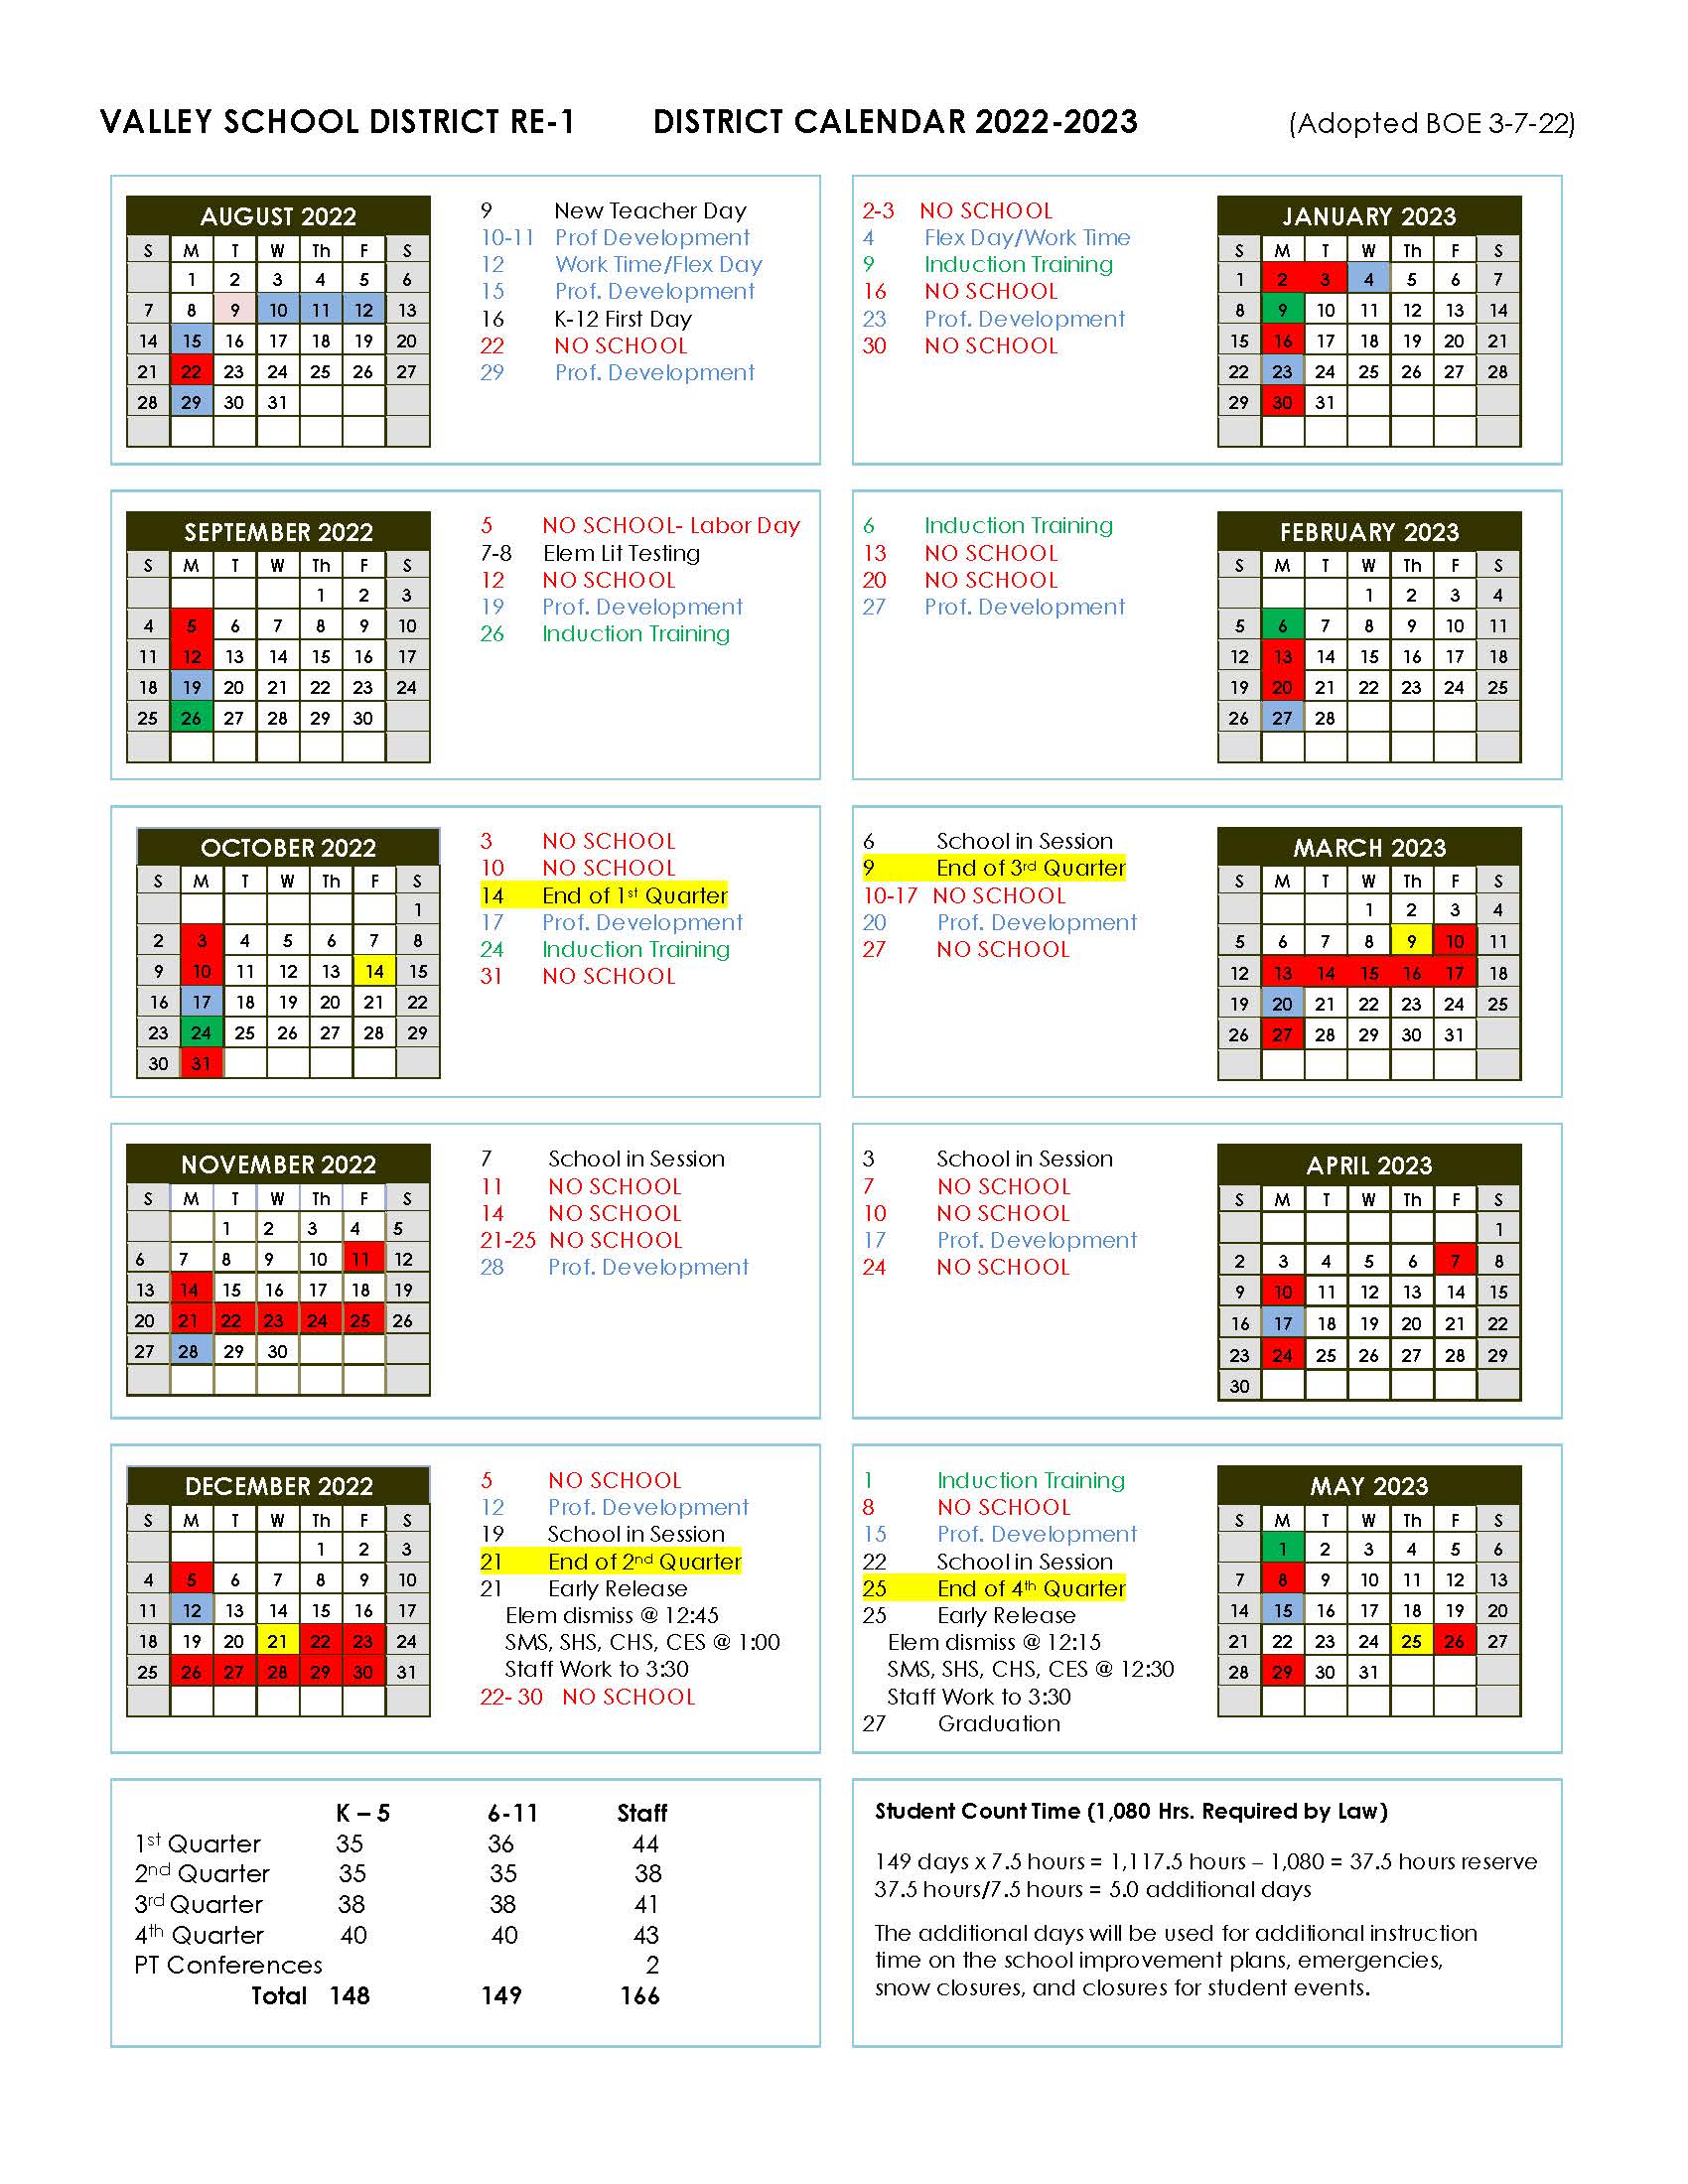 Valley School District RE1 Calendar 20242025